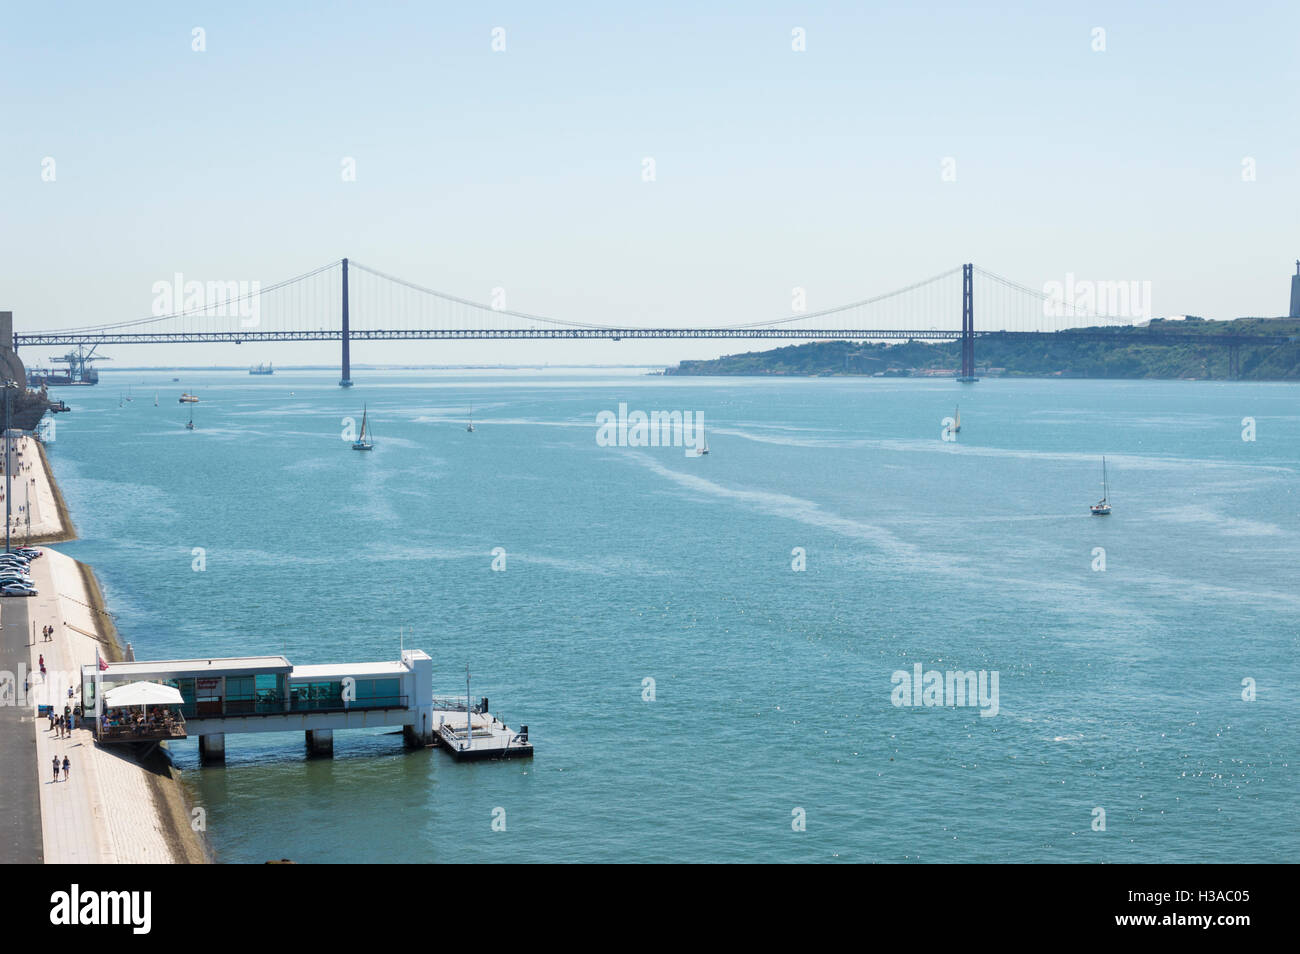 Panorama sea view of Lisbon coast, Portugal Stock Photo